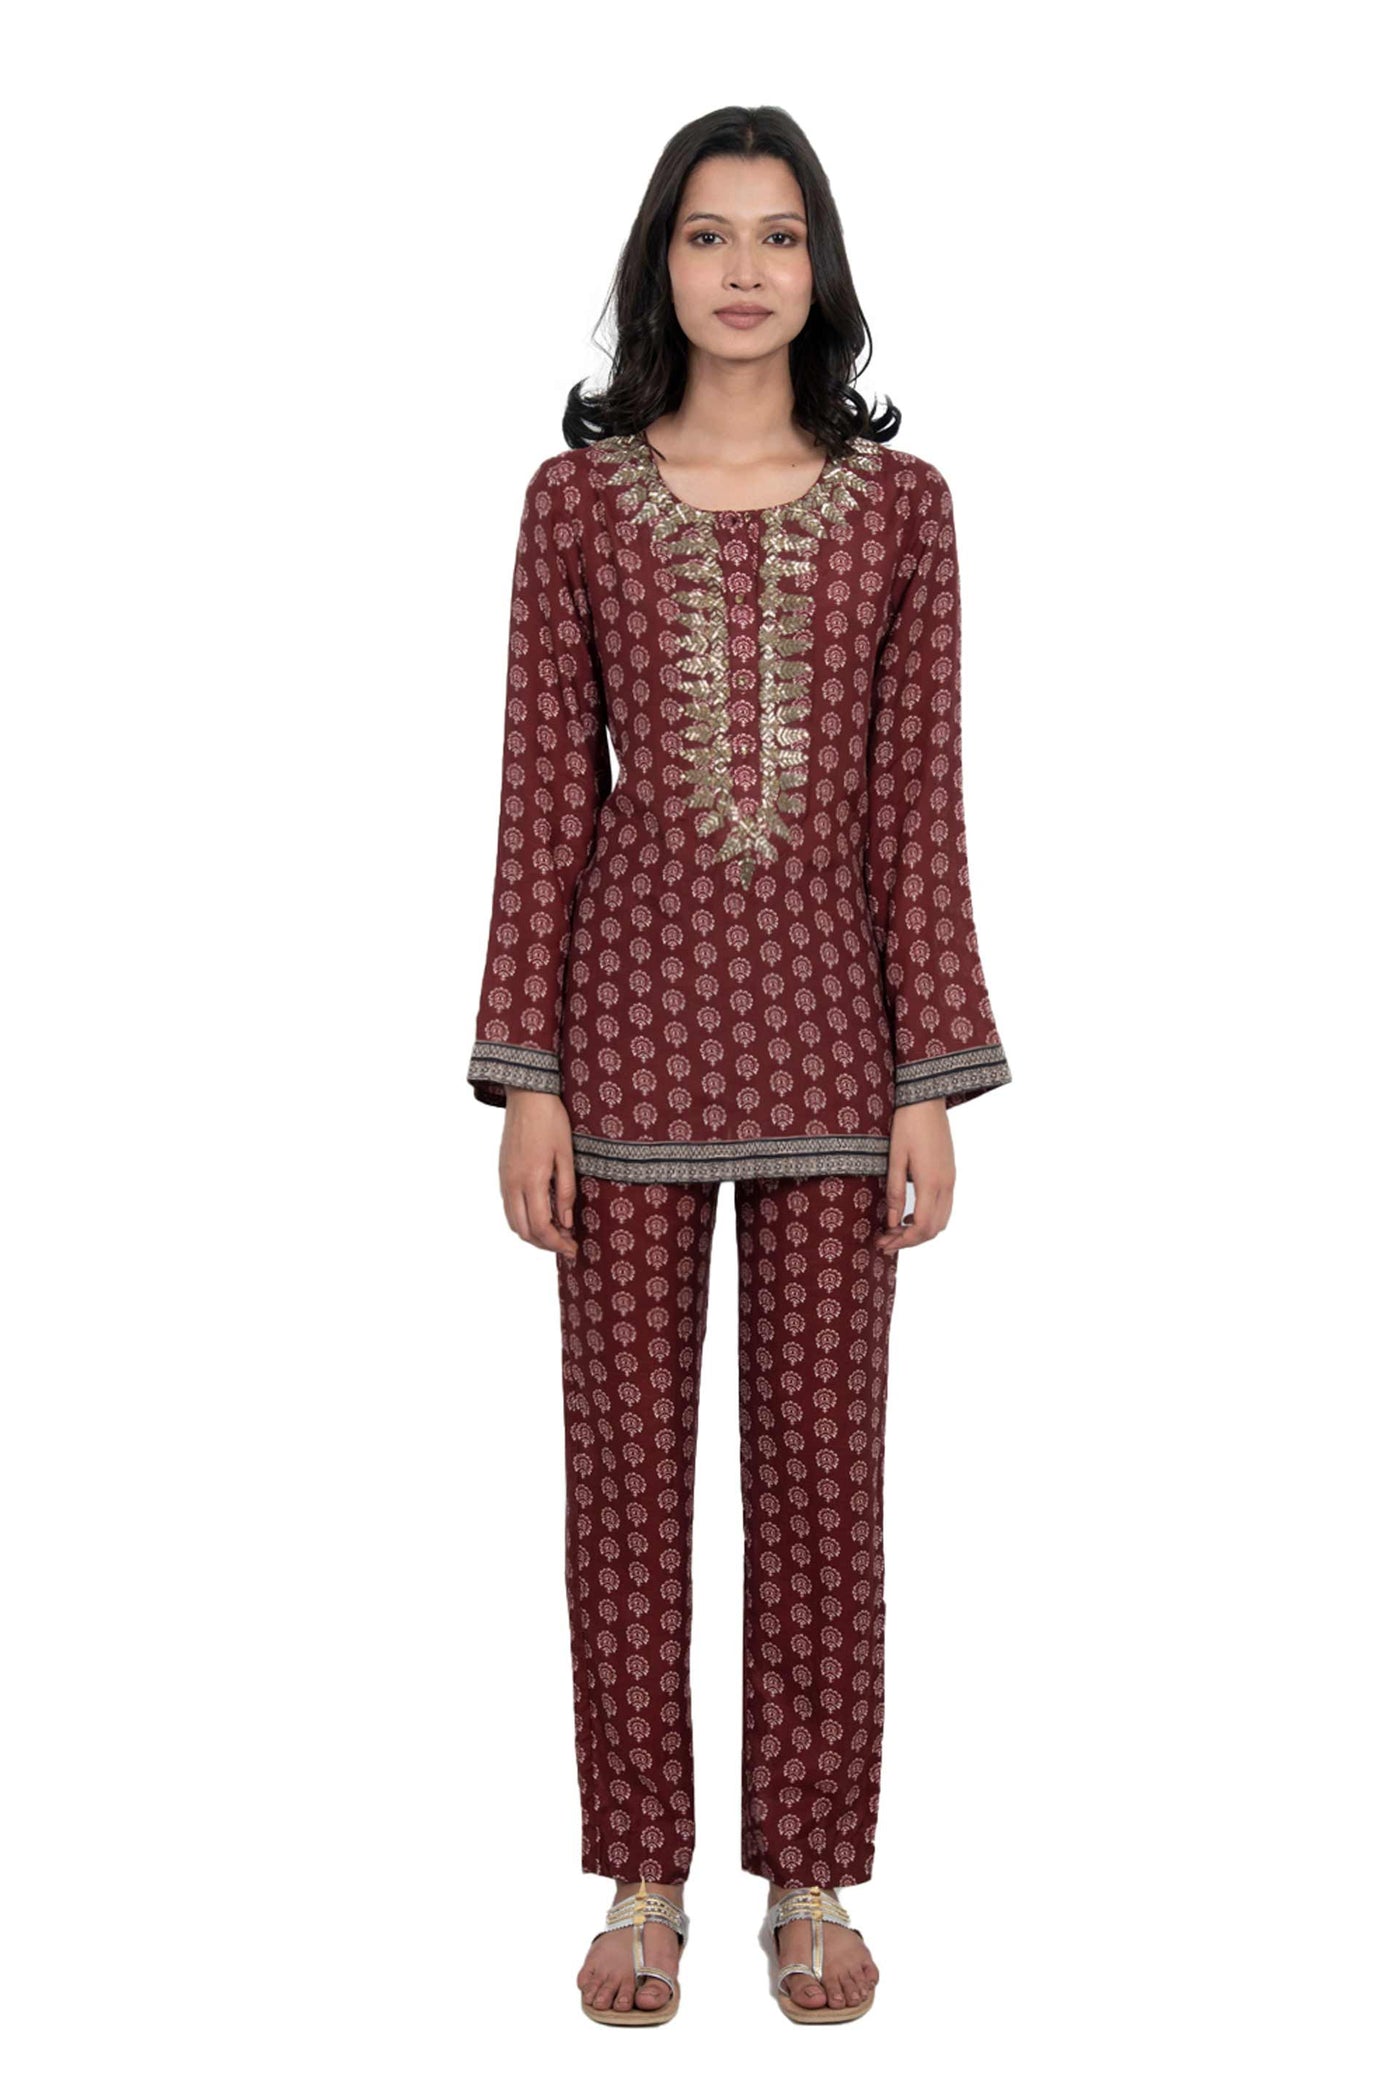 monisha jaising Shalimar Bagh Twin Set maroon red online shopping melange singapore indian designer wear